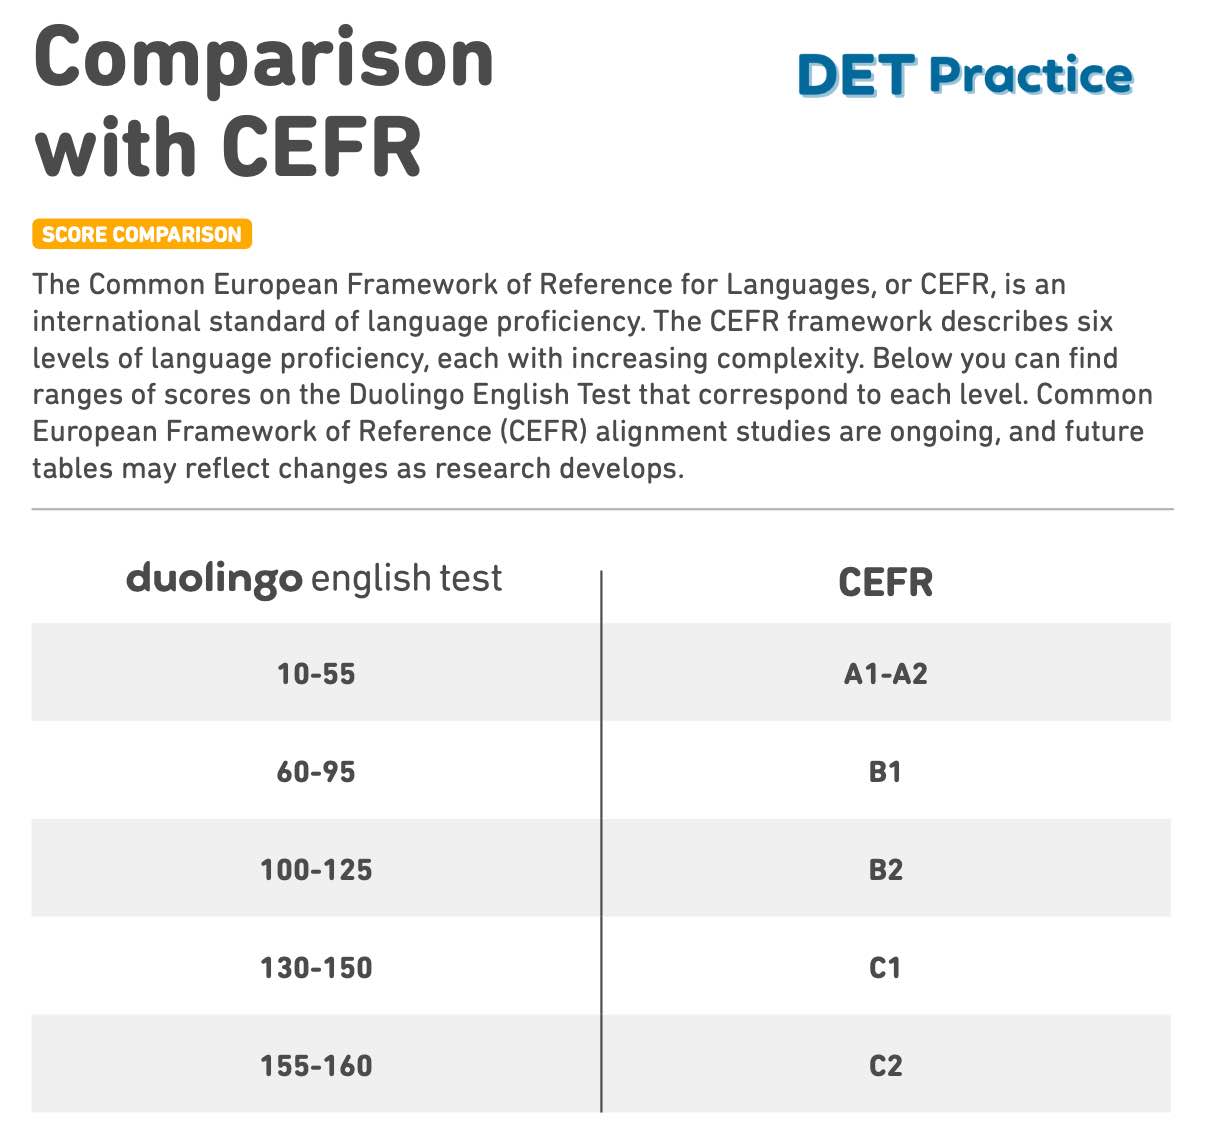 DET Ready and CEFR, det practice platform, Duolingo Test preparation, det practice, sub score explain 